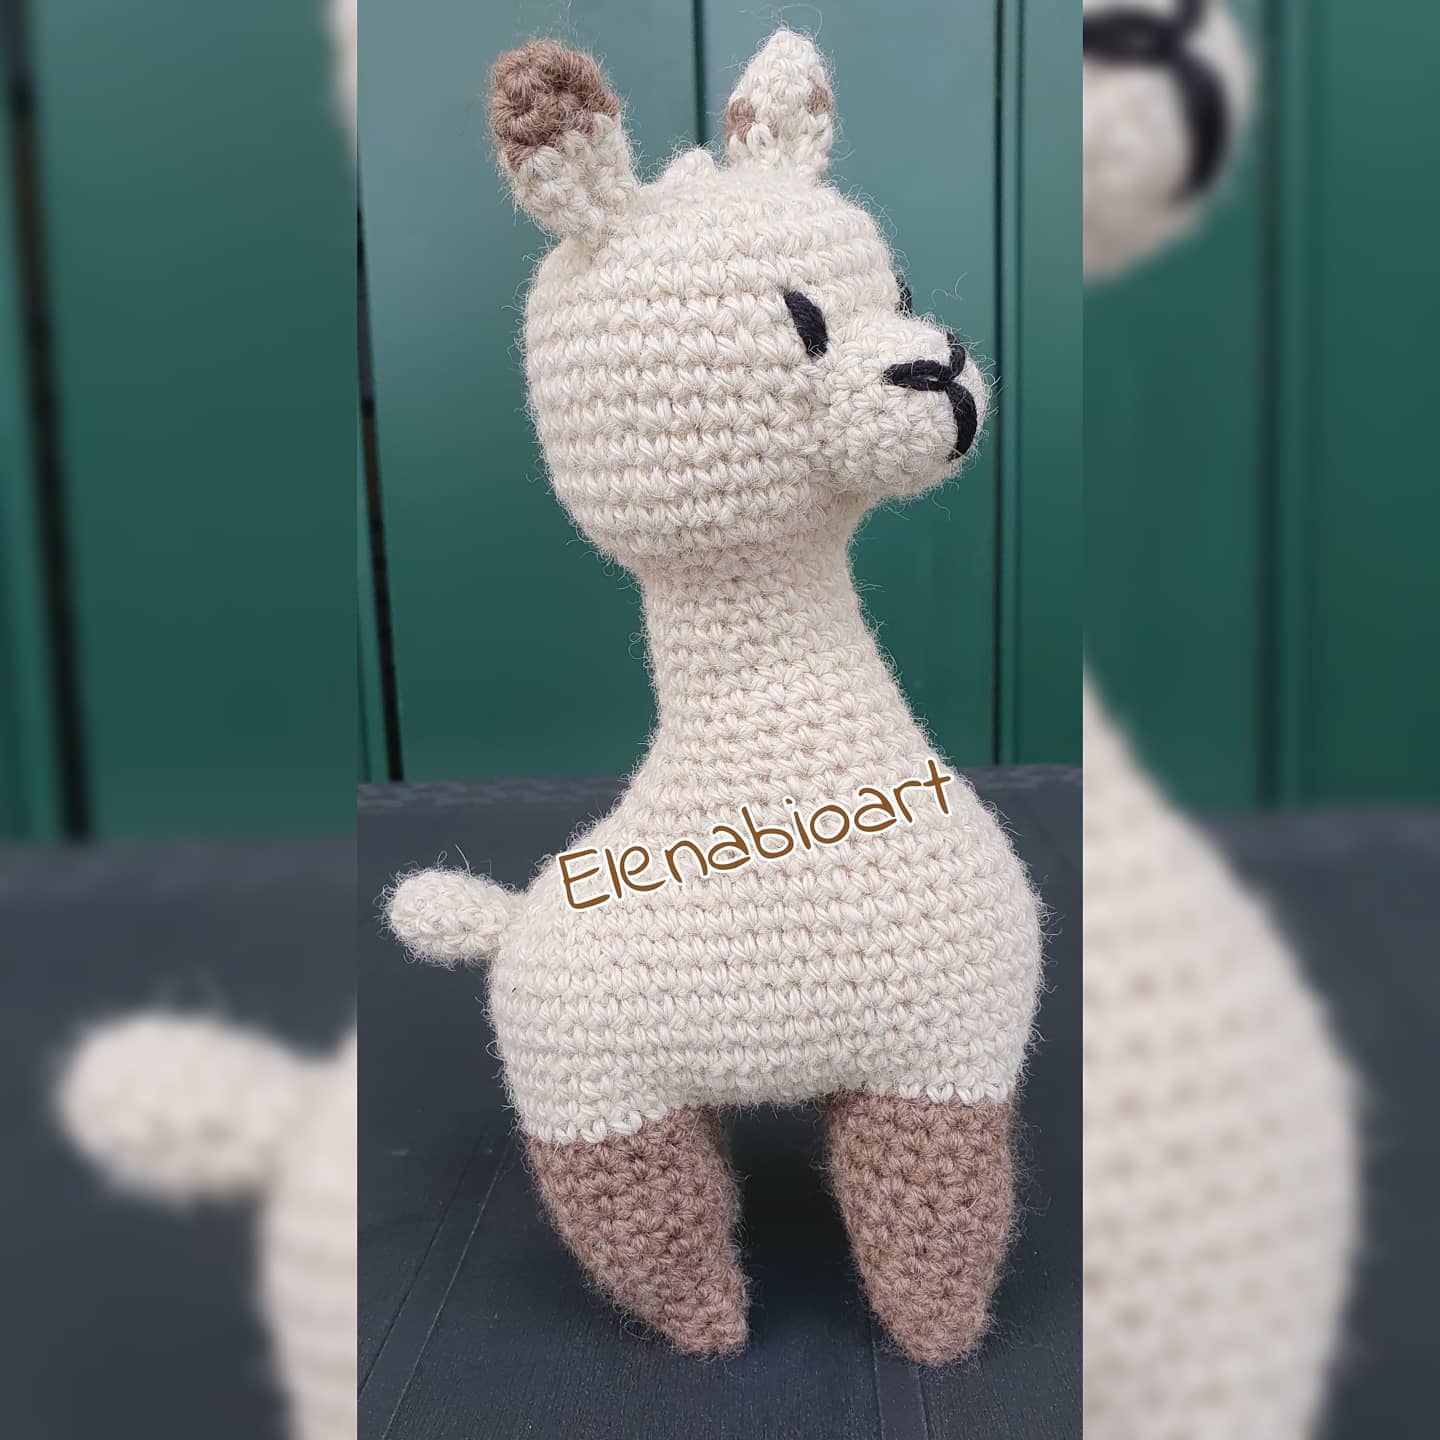 Elenabioart Crochet alpaca 